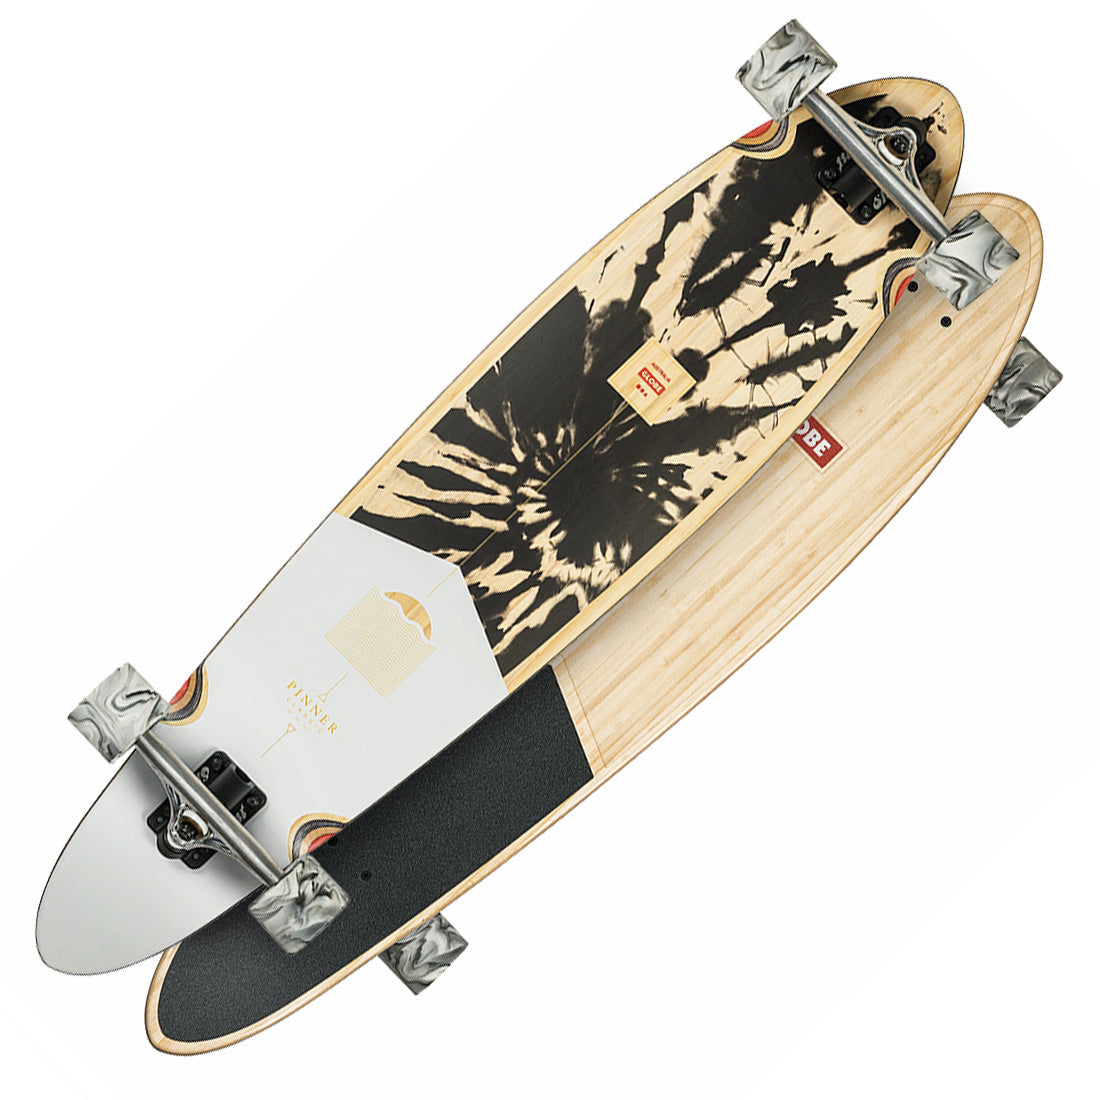 Globe Pinner Classic 40 Complete - Bamboo/Black Dye Skateboard Completes Longboards